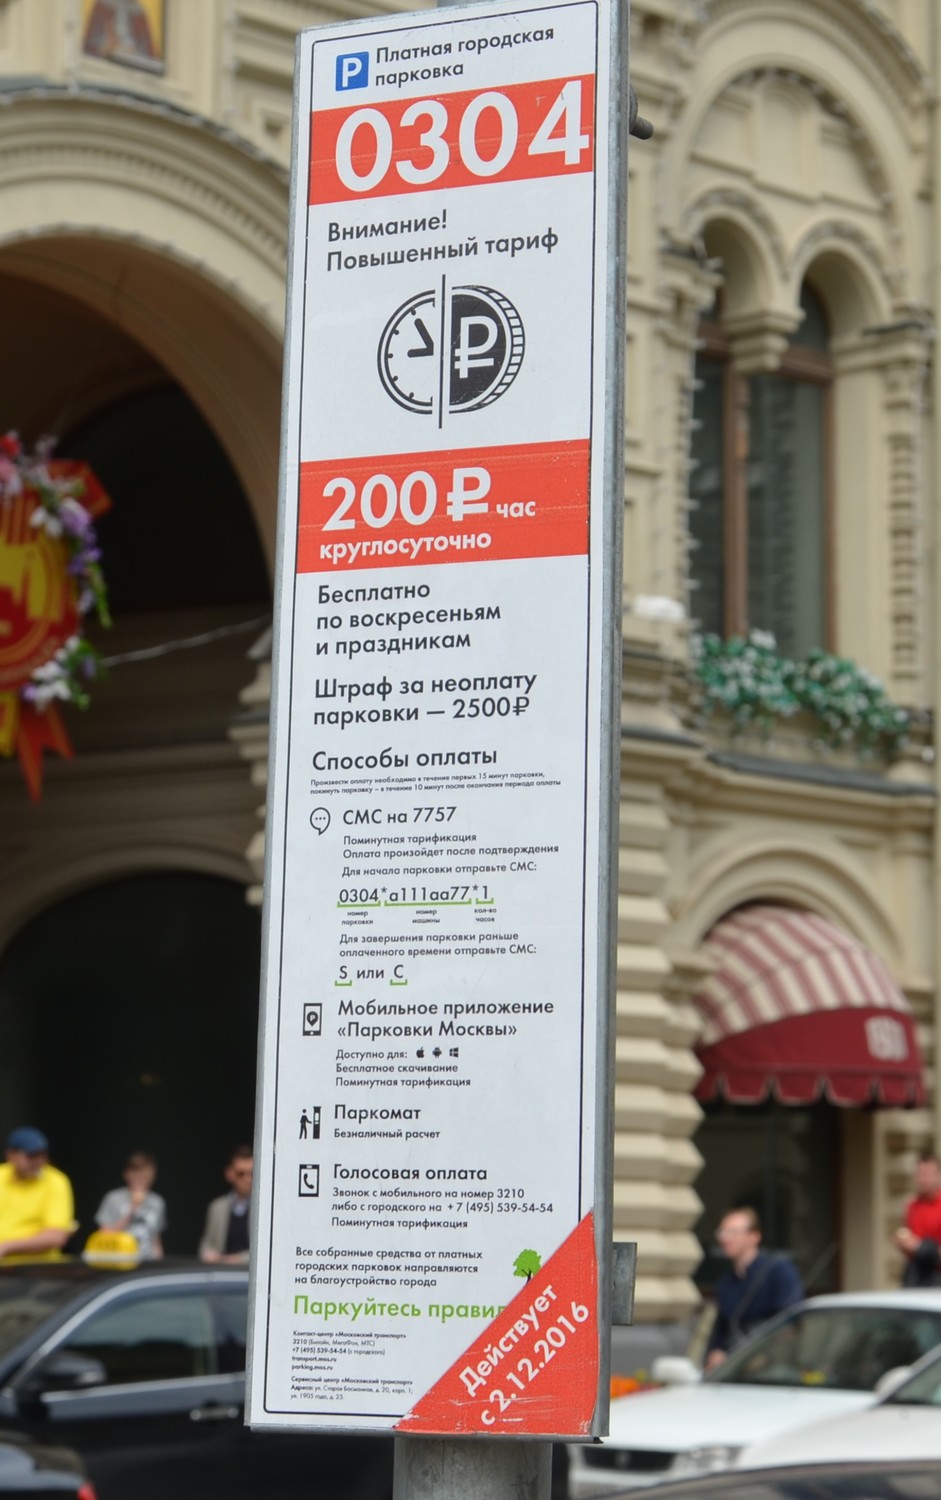 цена парковки возле Красной площади Москва